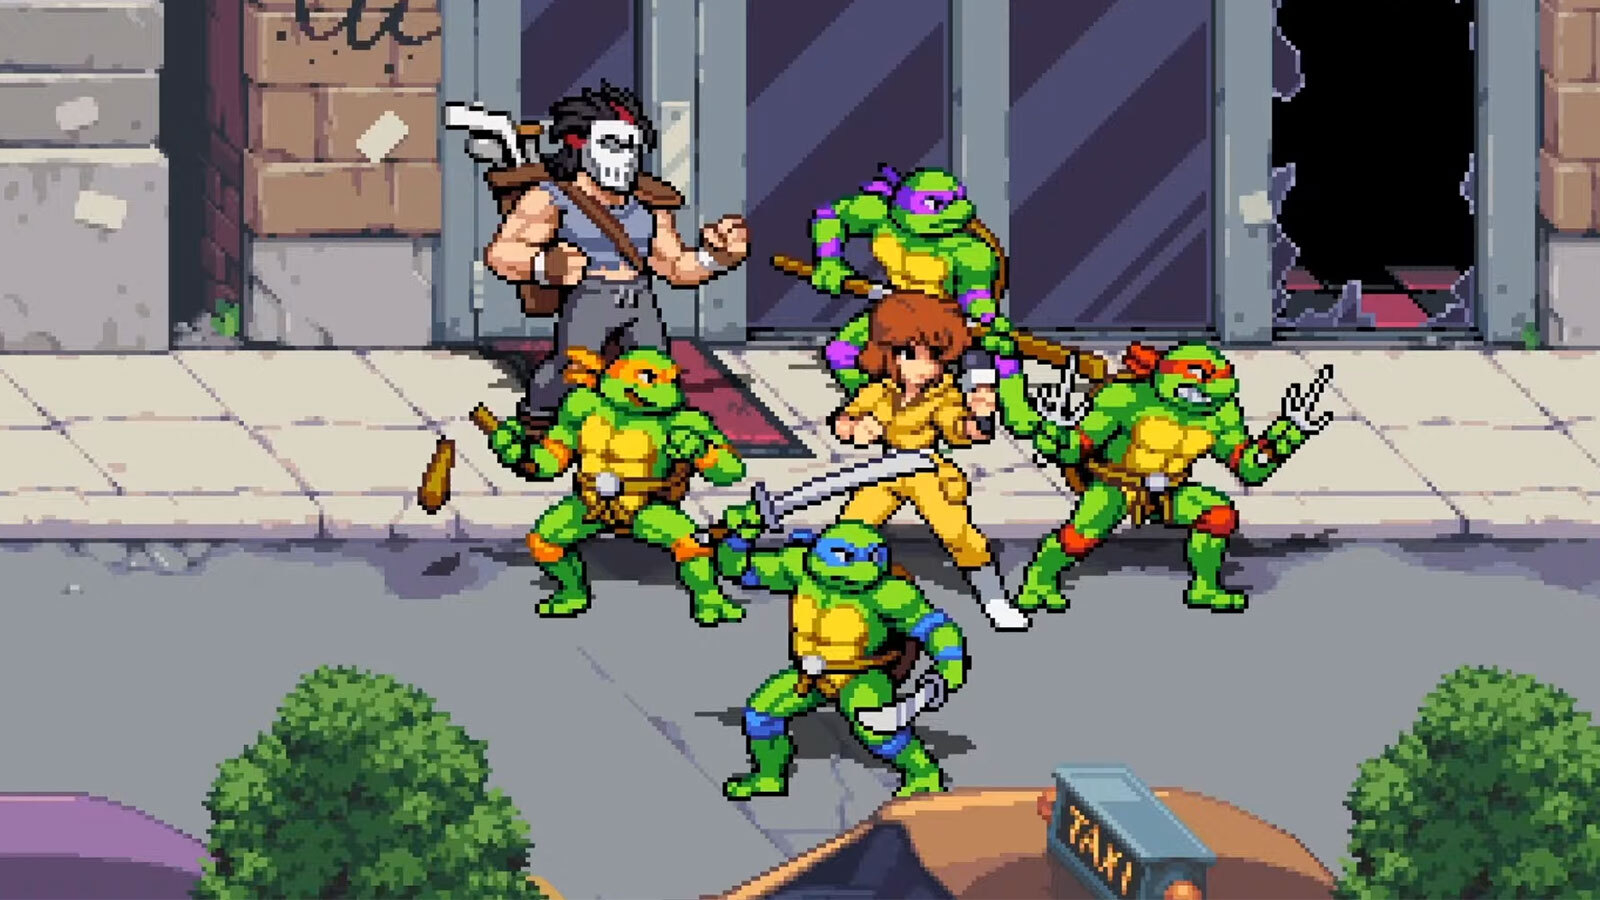 Ten Inch Mutant Ninja Turtles Full